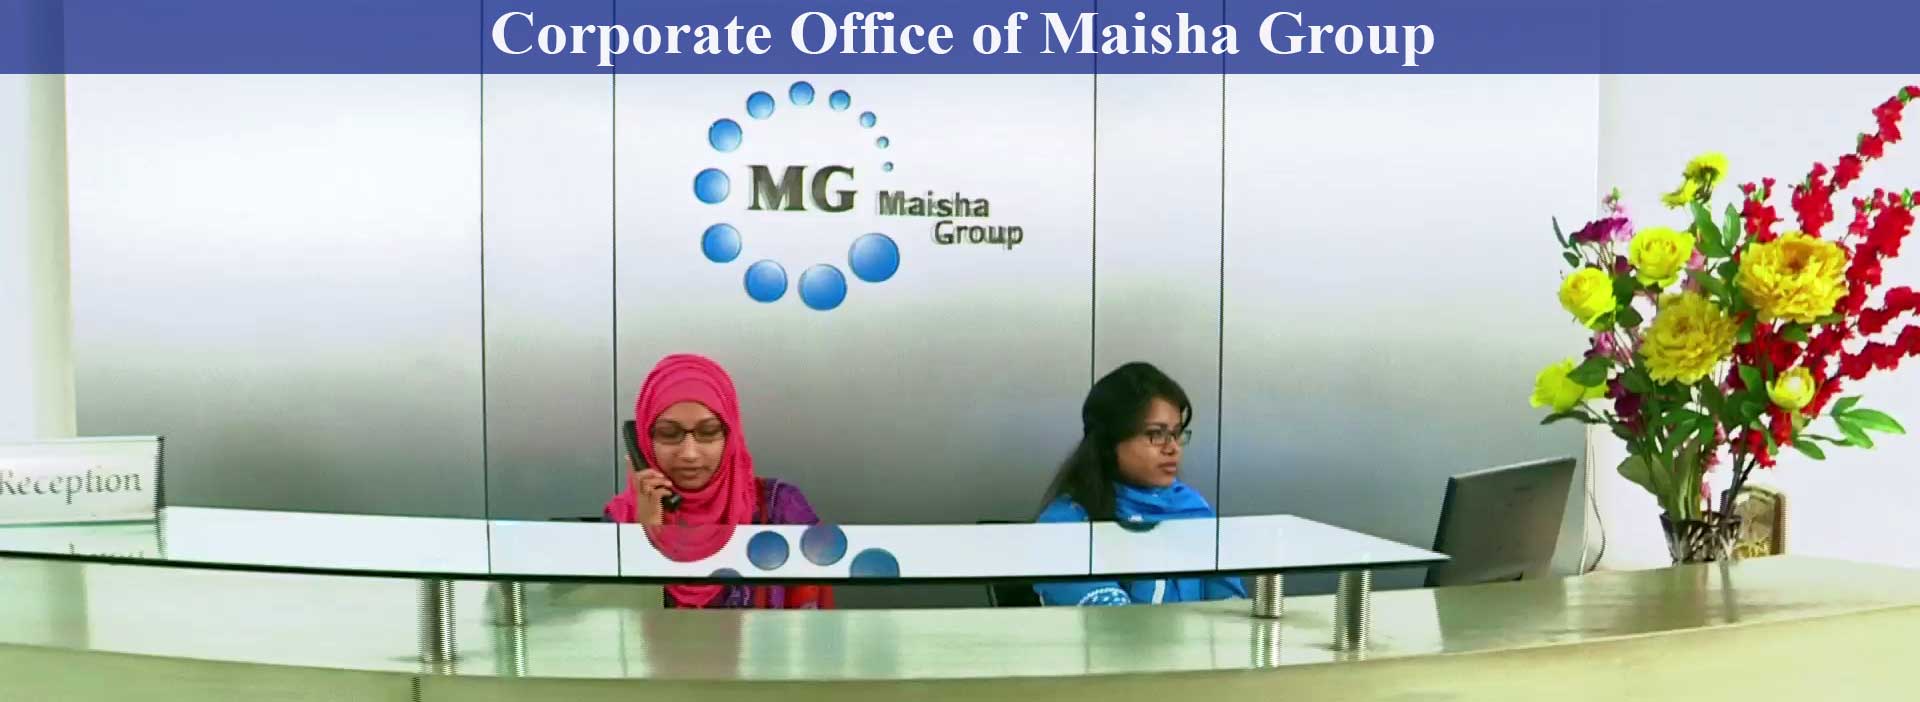 Corporate-Office-of-Maisha-Group